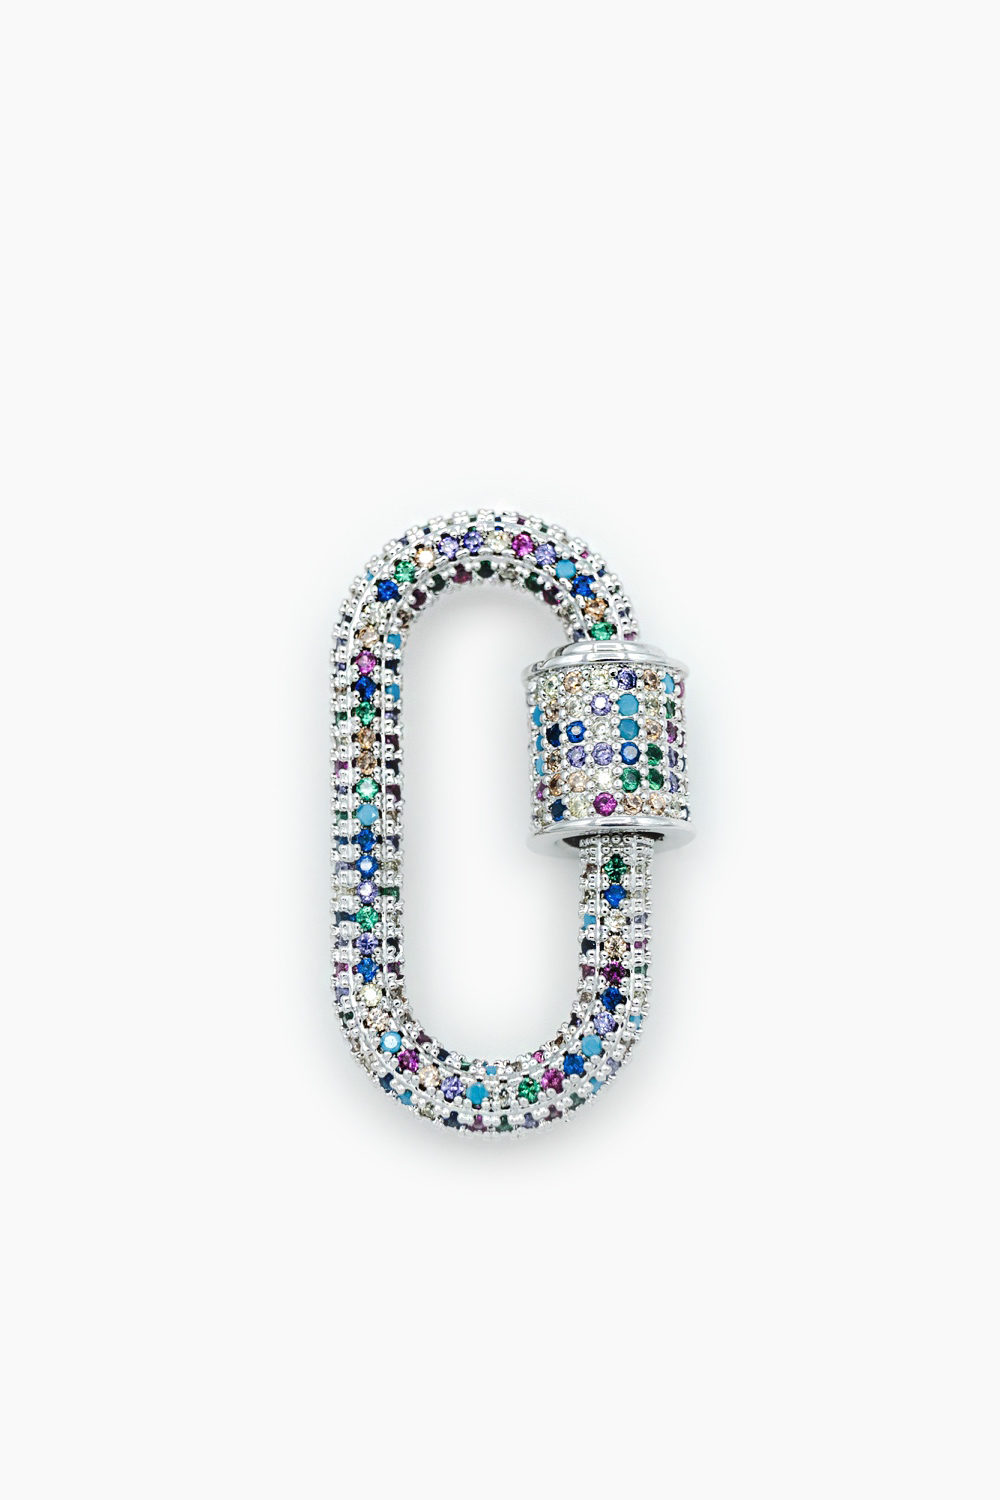 Jewellery Concept: Lock Prata